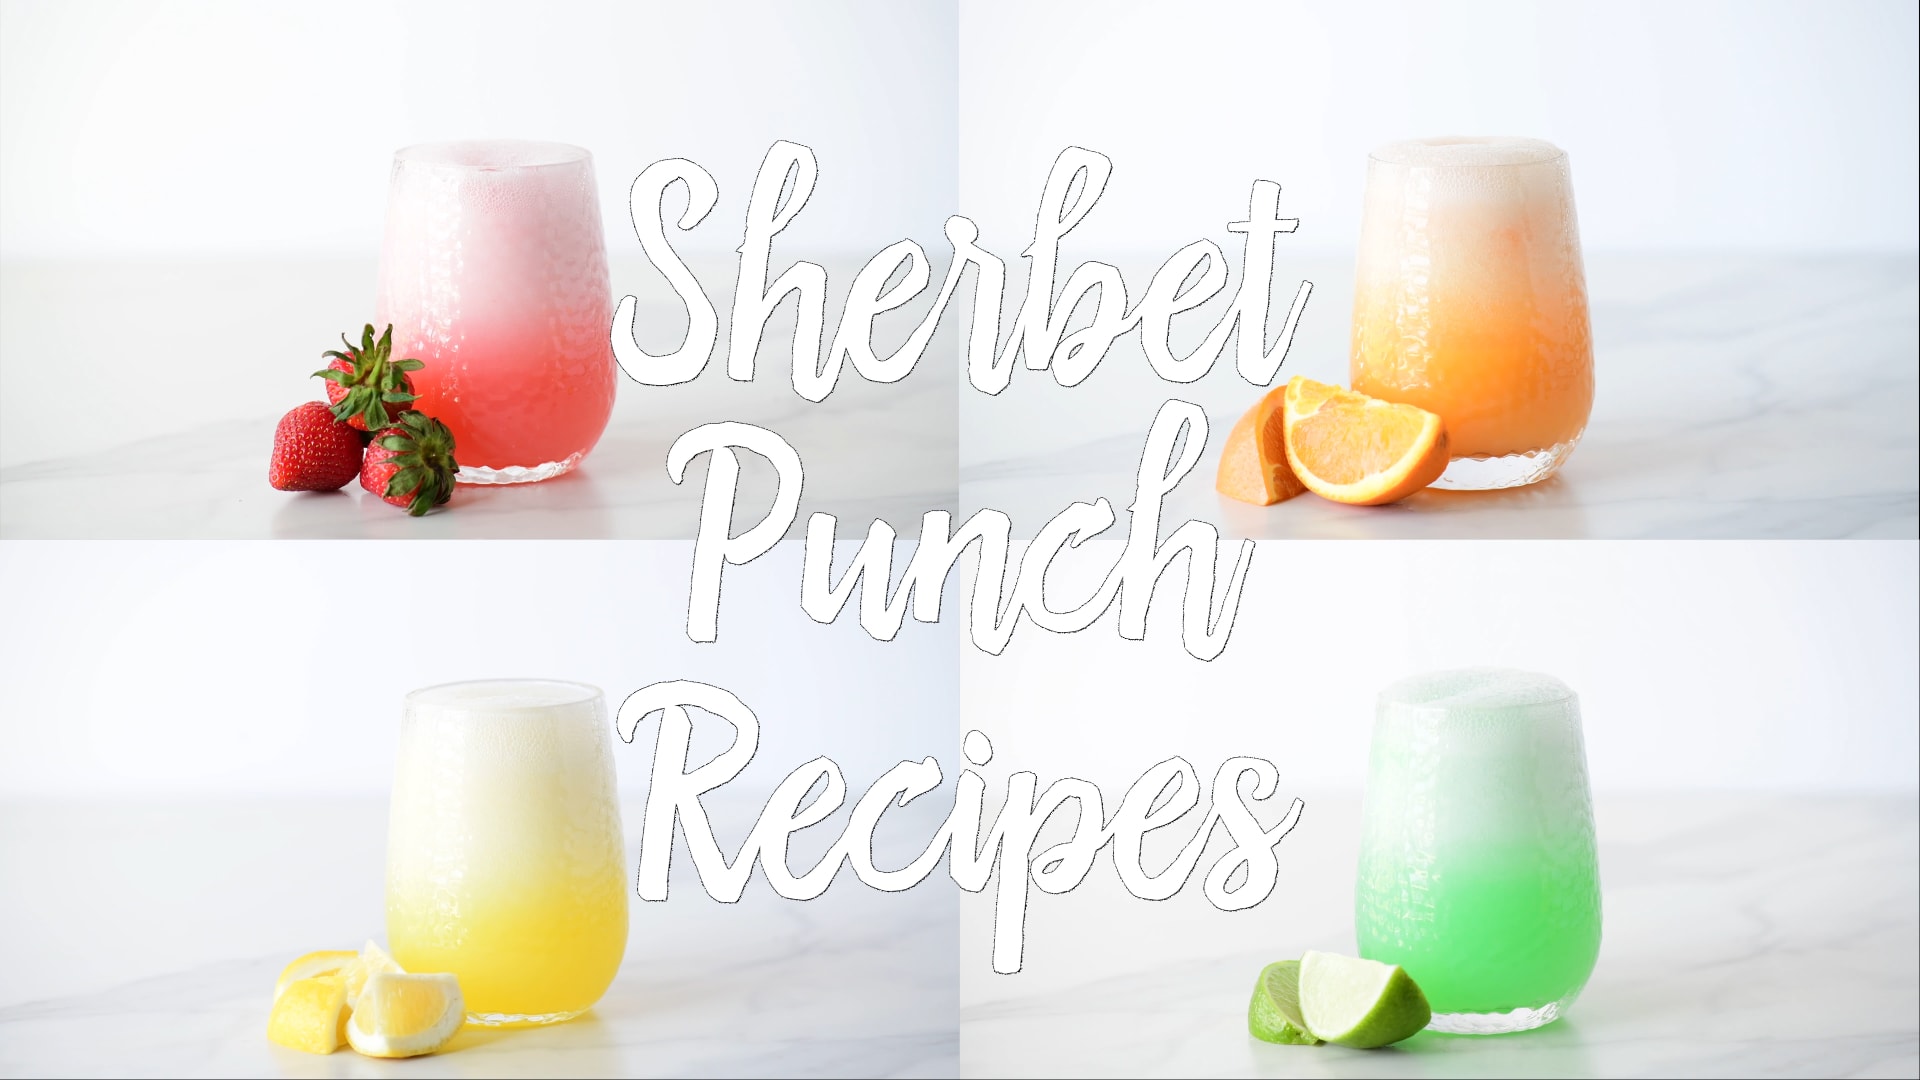 Sherbet Punch Recipes - The Gunny Sack